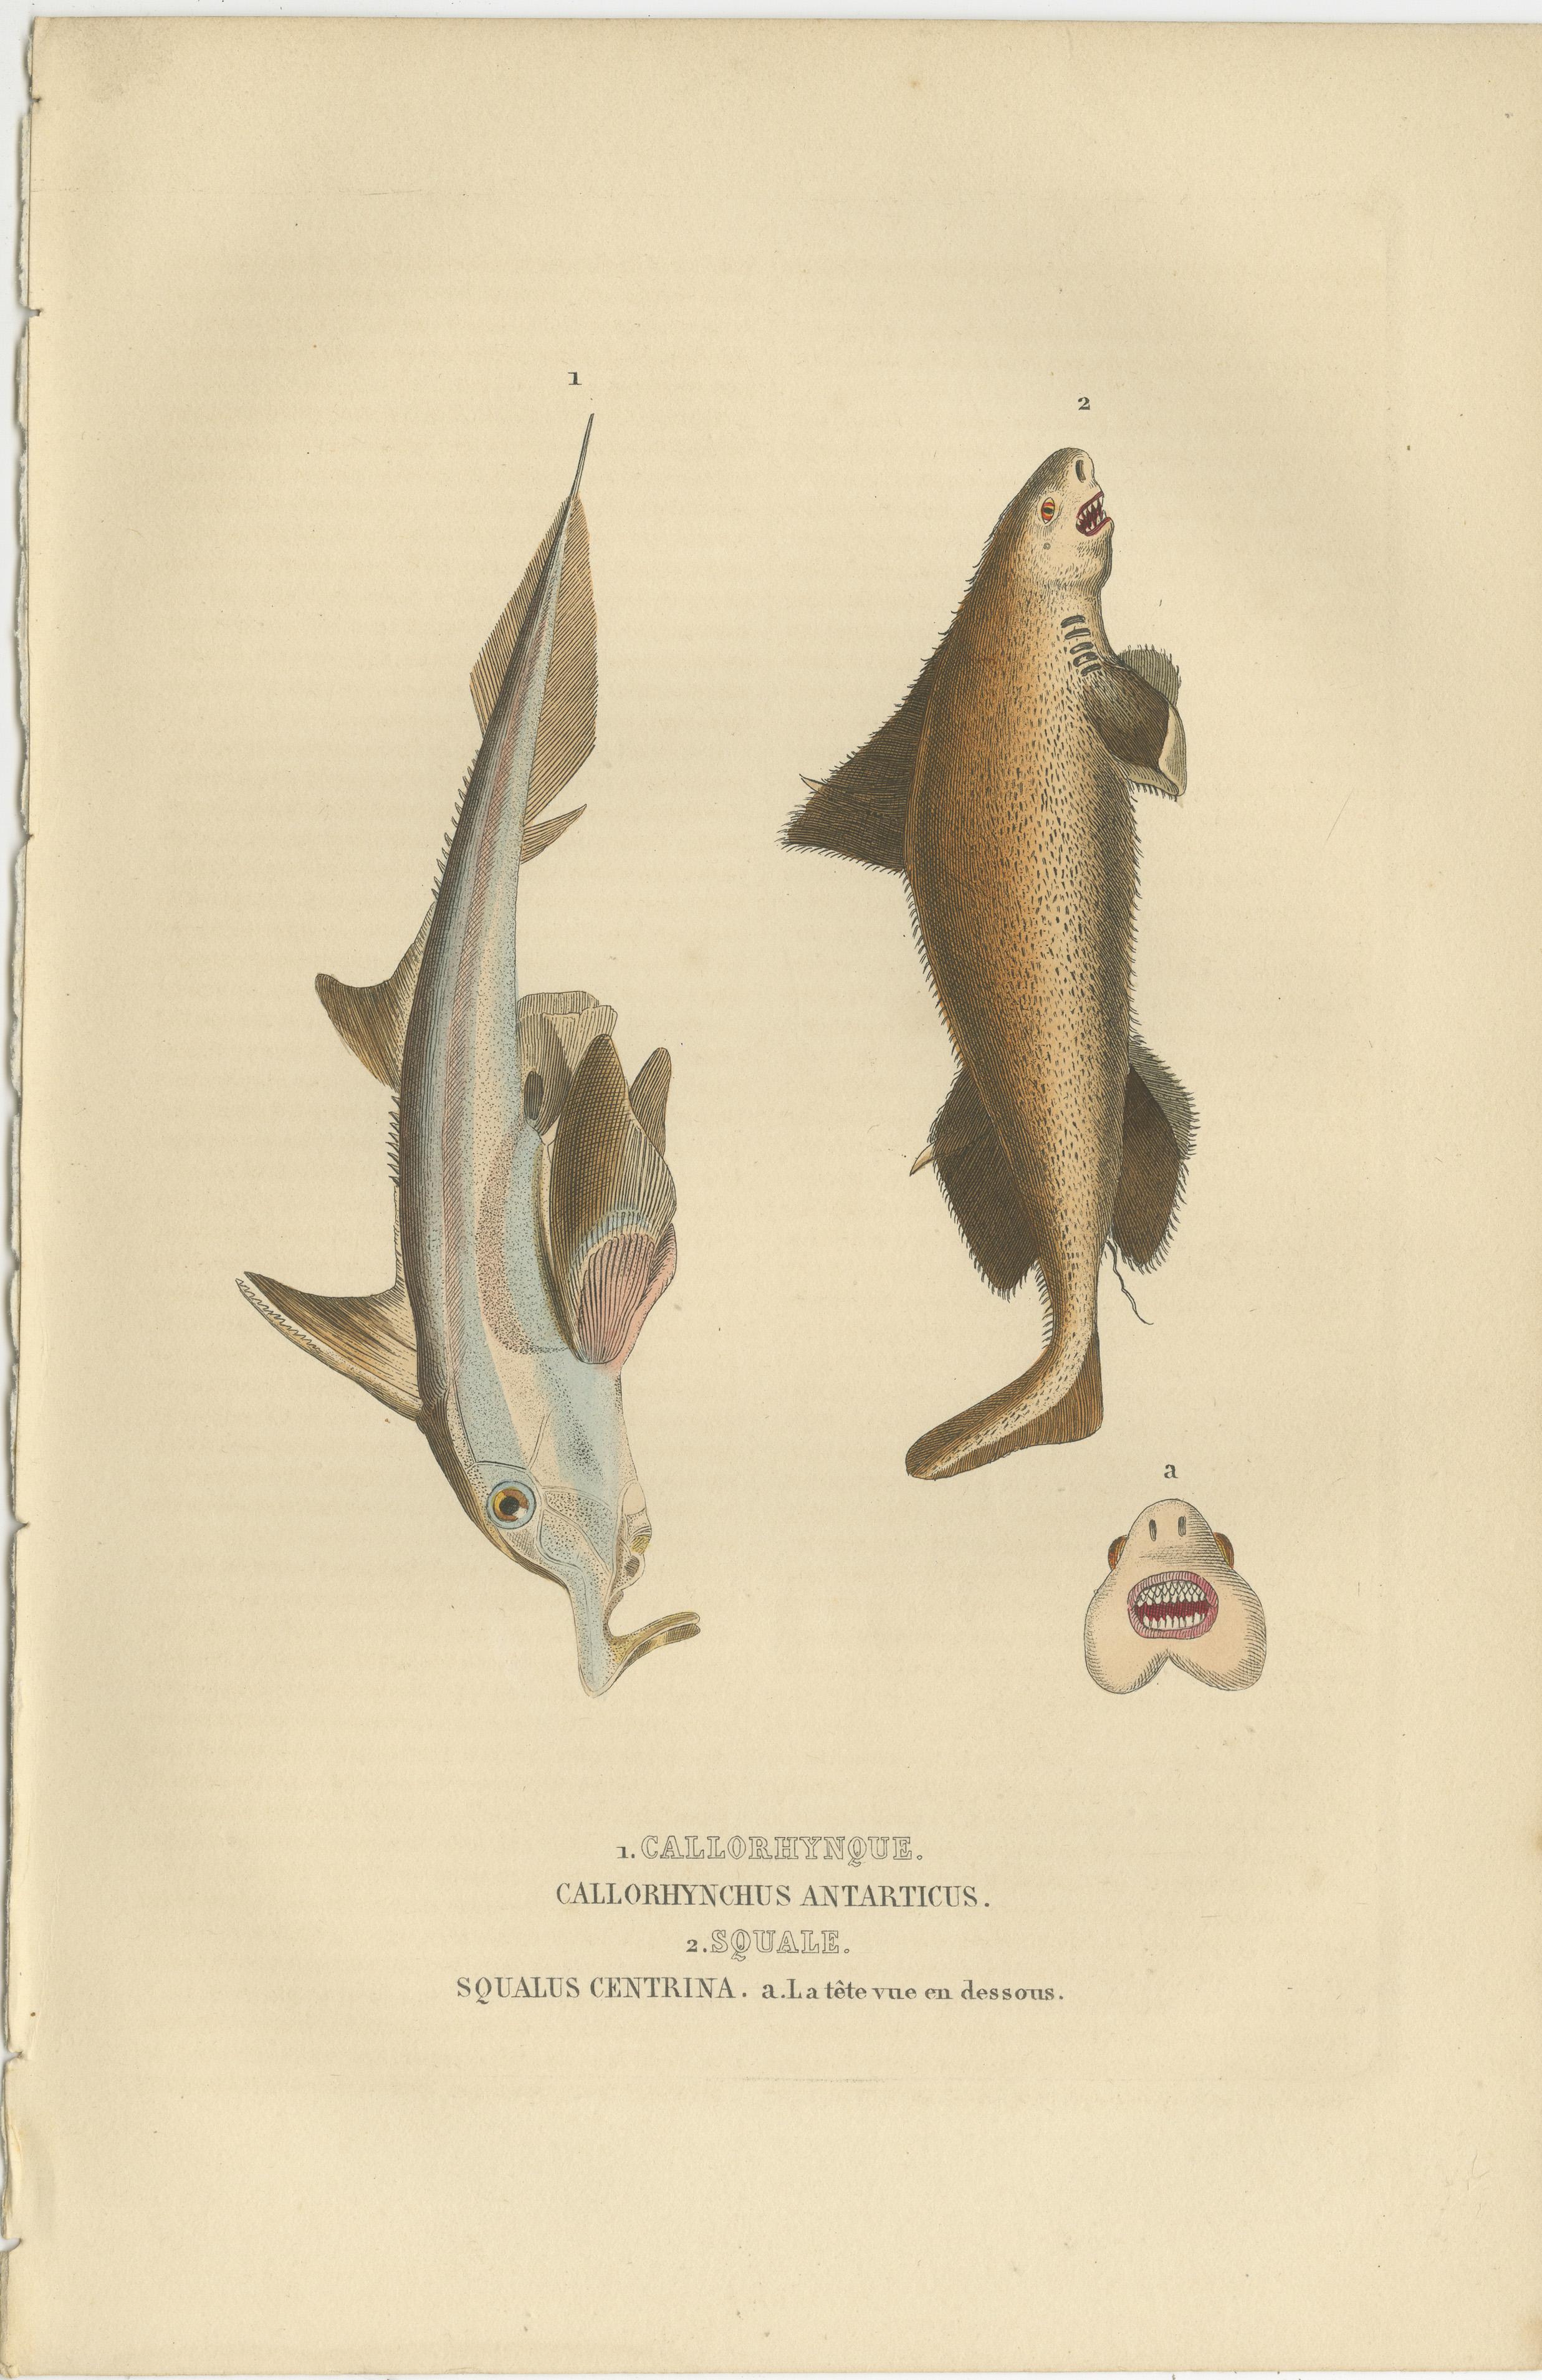 Engraved Marine Majesty: Swordfish & Sealife Engravings in Old Handcoloring, 1845 For Sale